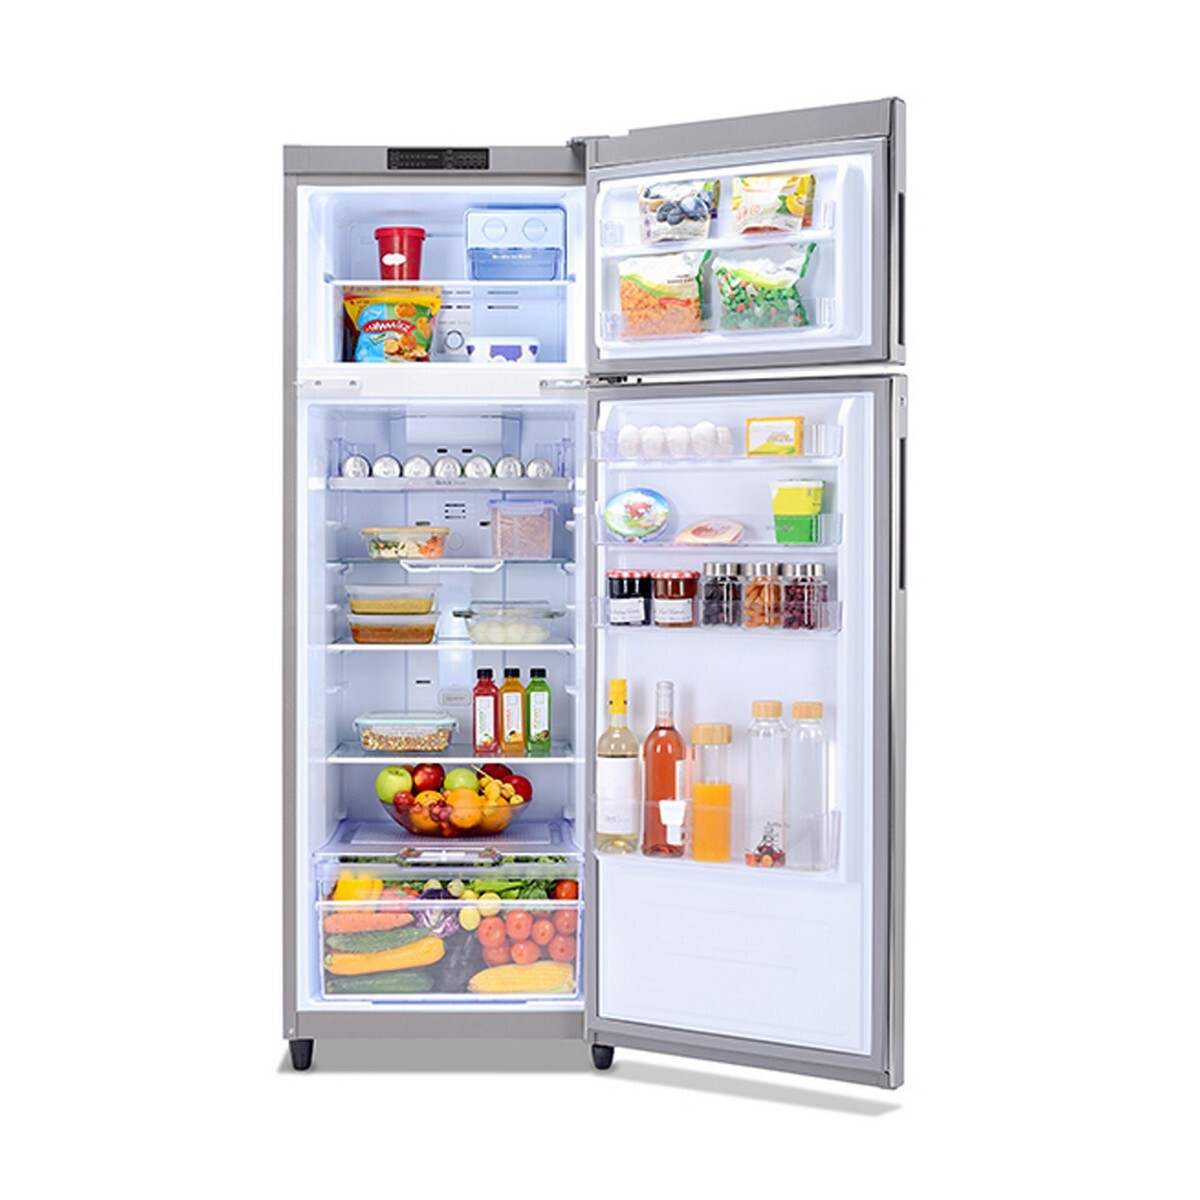 Godrej 265 L Double Door Refrigerator RT EONVALOR 280B 25 RCIT TL WN